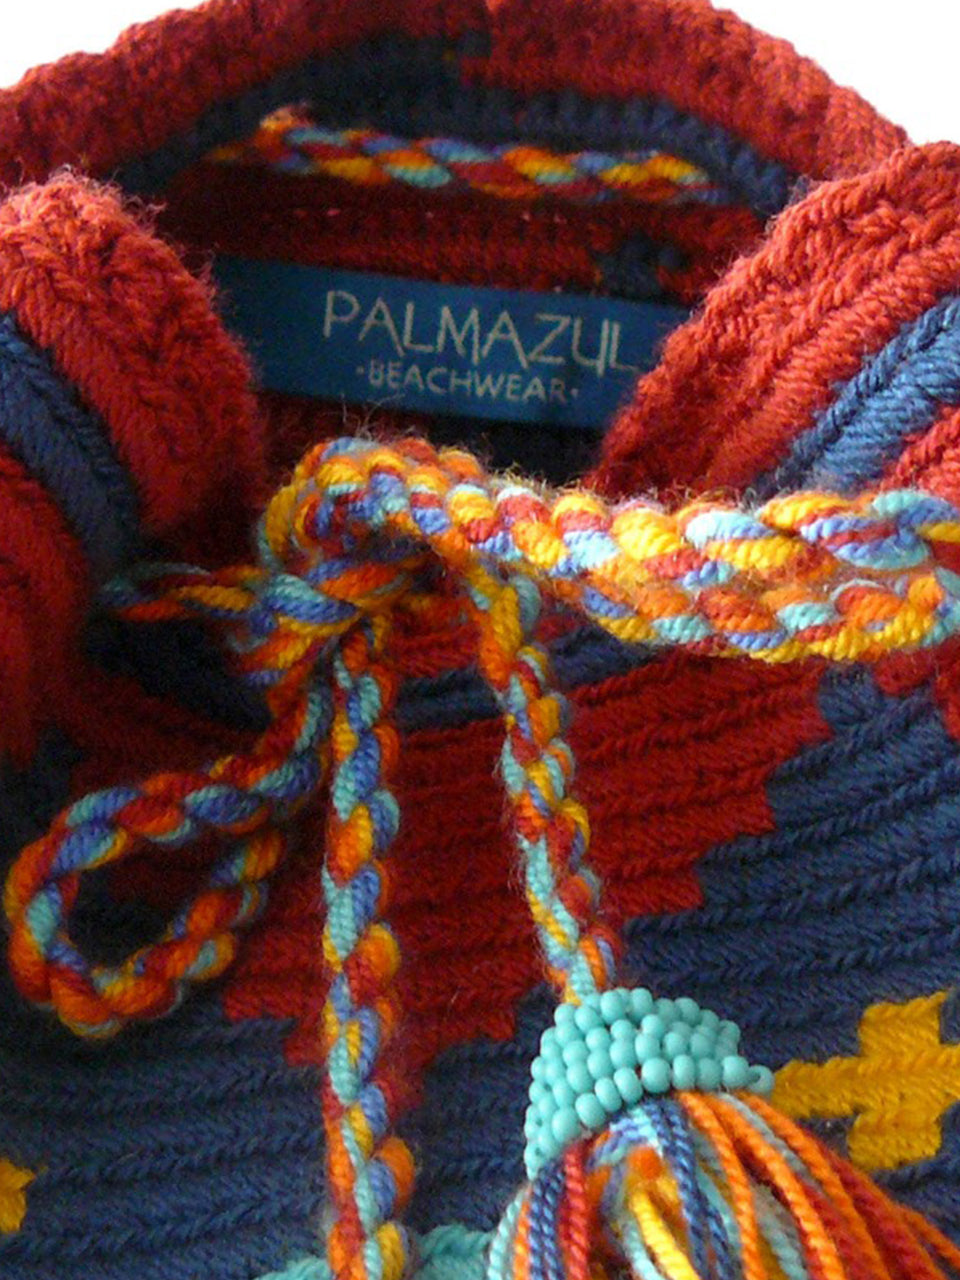 Close up Diamond pattern orange, yellow, red and blue woven shoulder bag with tassels and beads Palmazul Beachwear Wayuu Mochila